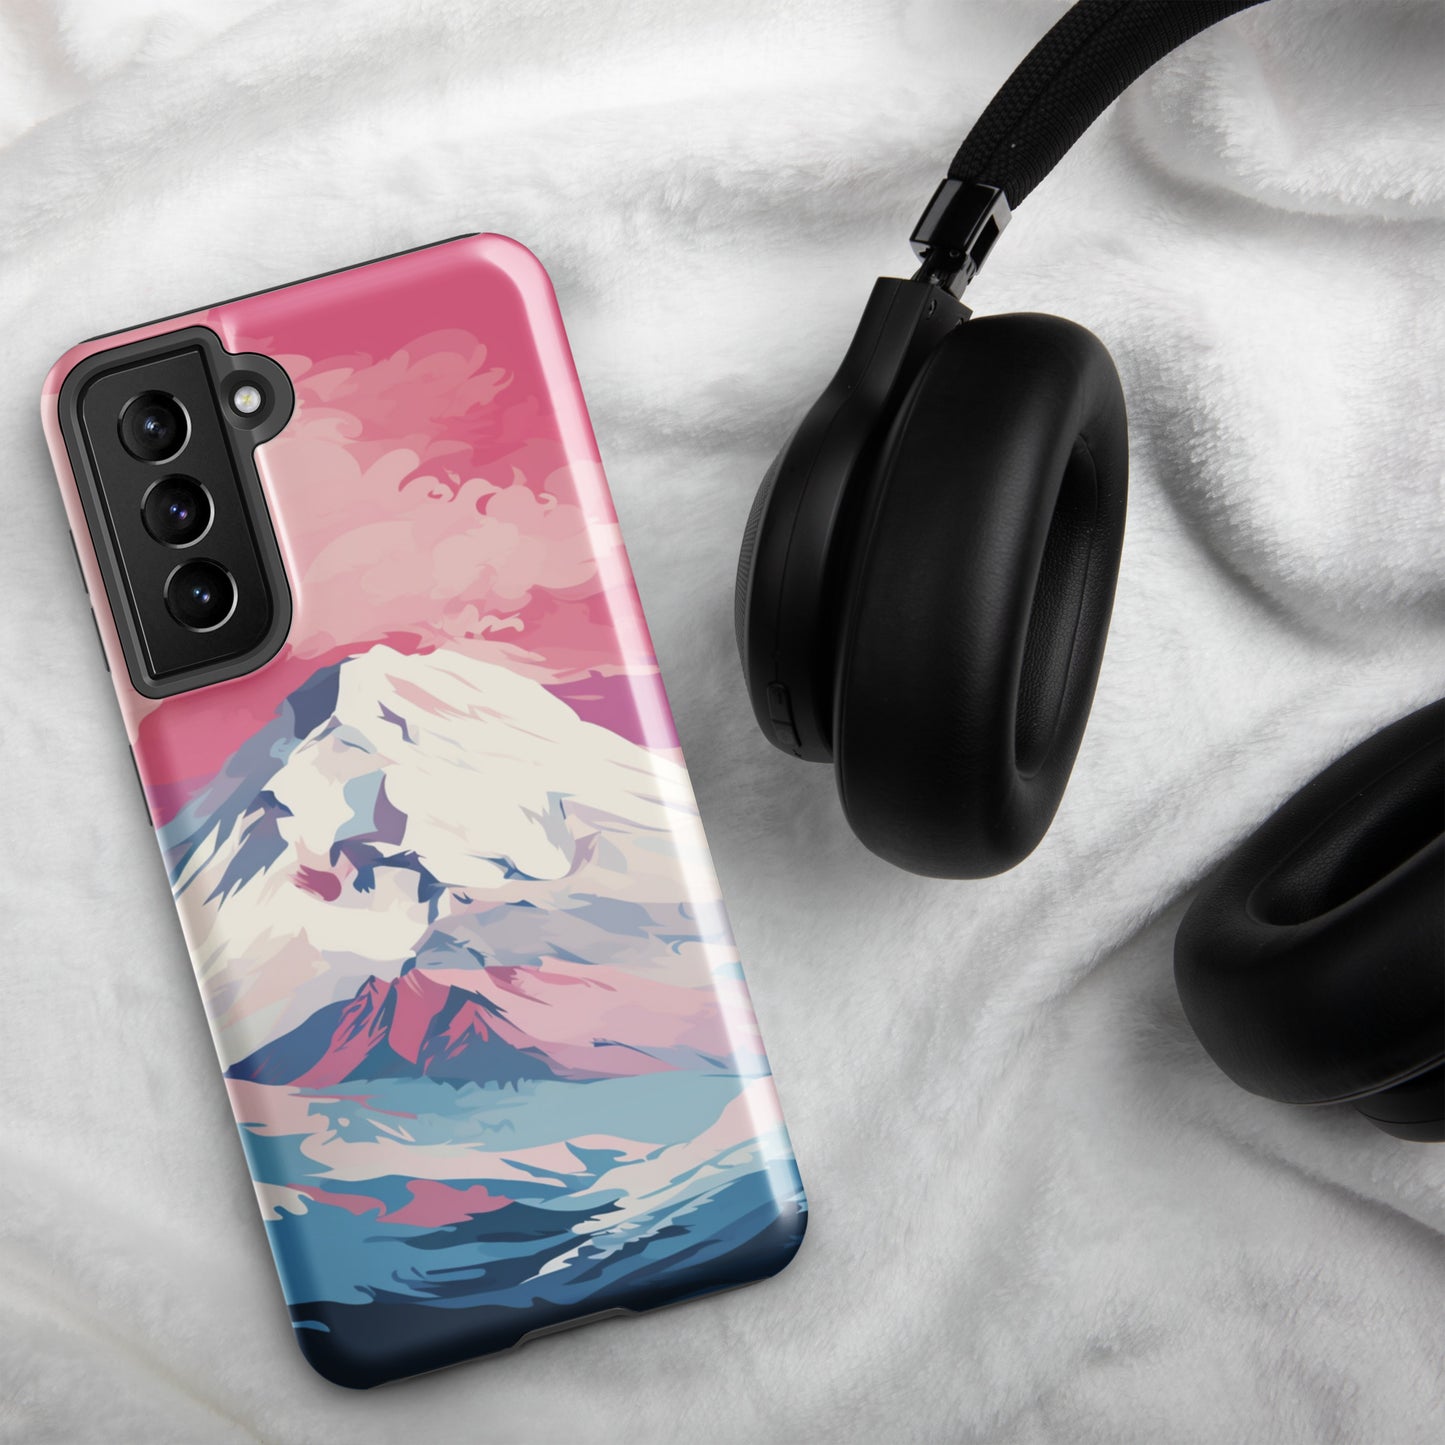 Pastel Mountain Tough Case, Shockproof Phone Case,Cool Designed Phone Cases, Pocket-friendly